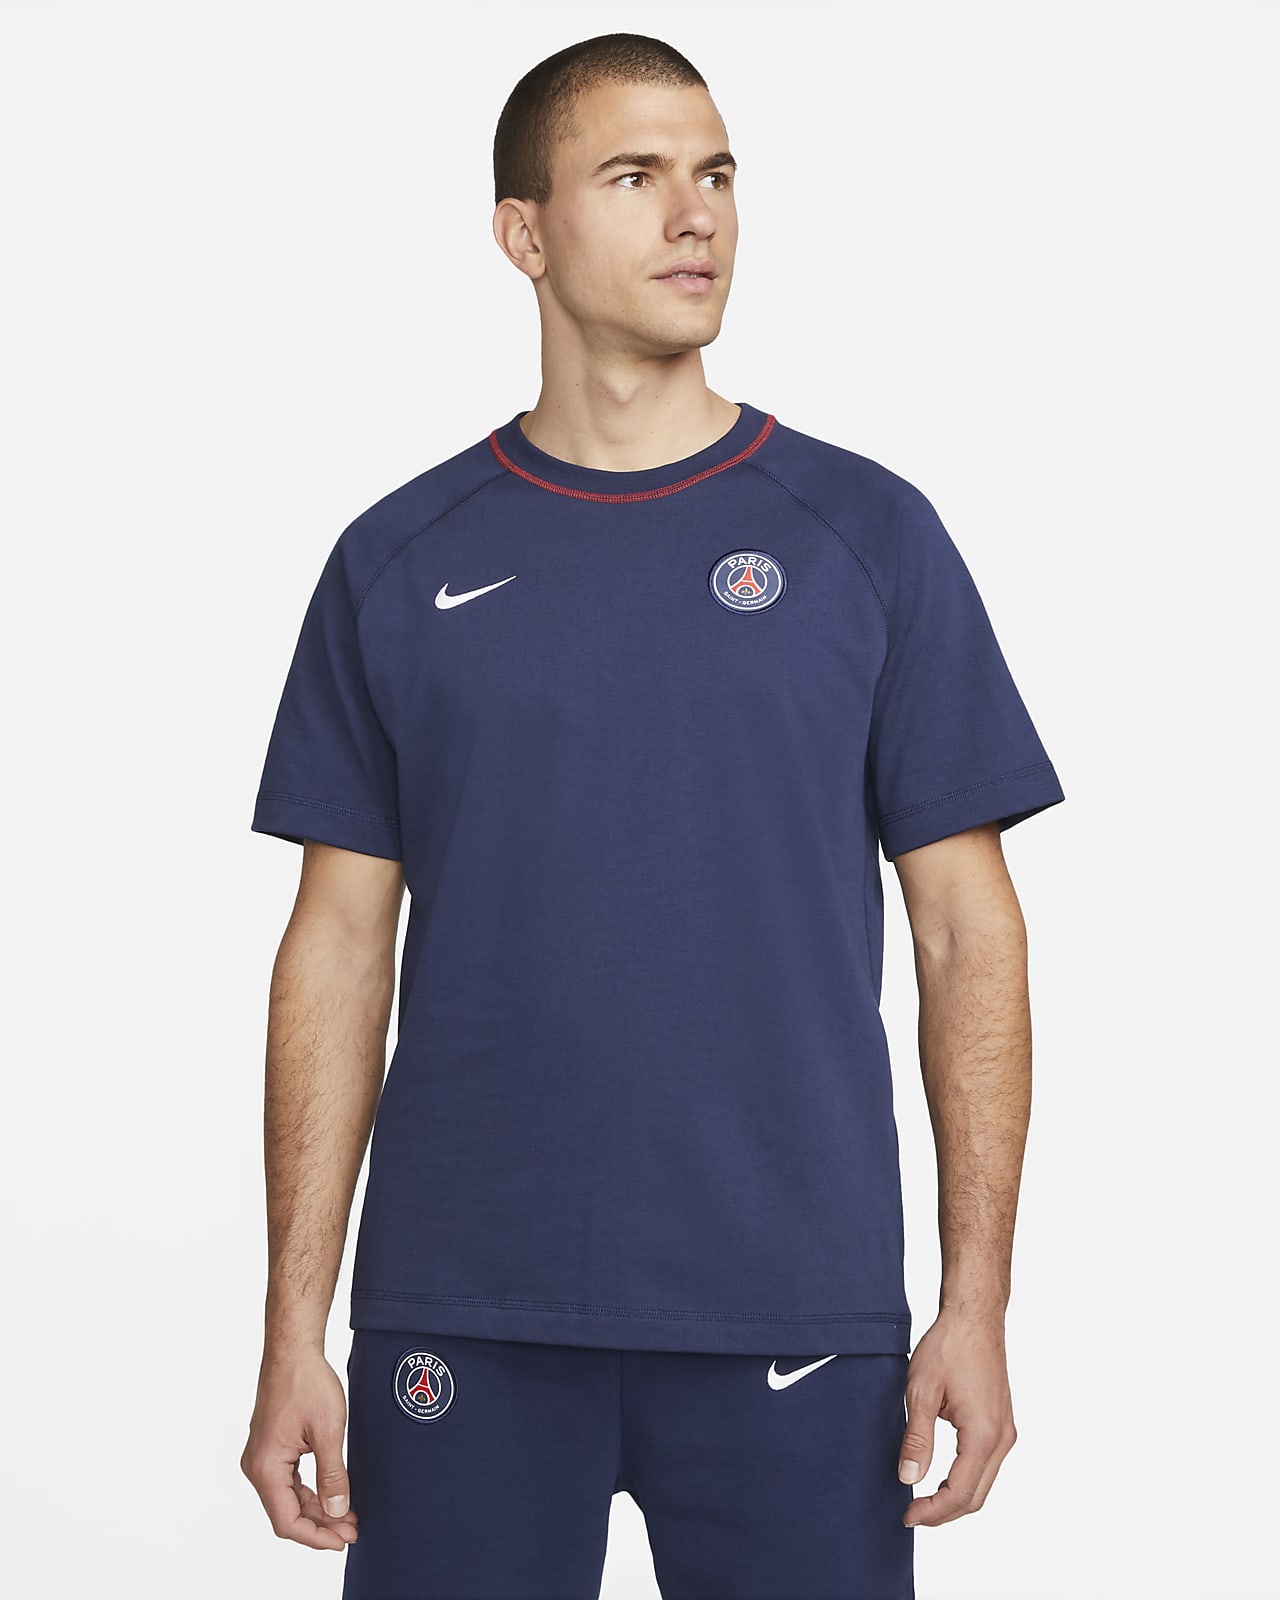 Attent traagheid Mm Paris Saint-Germain Men's Short-Sleeve Soccer Top. Nike.com